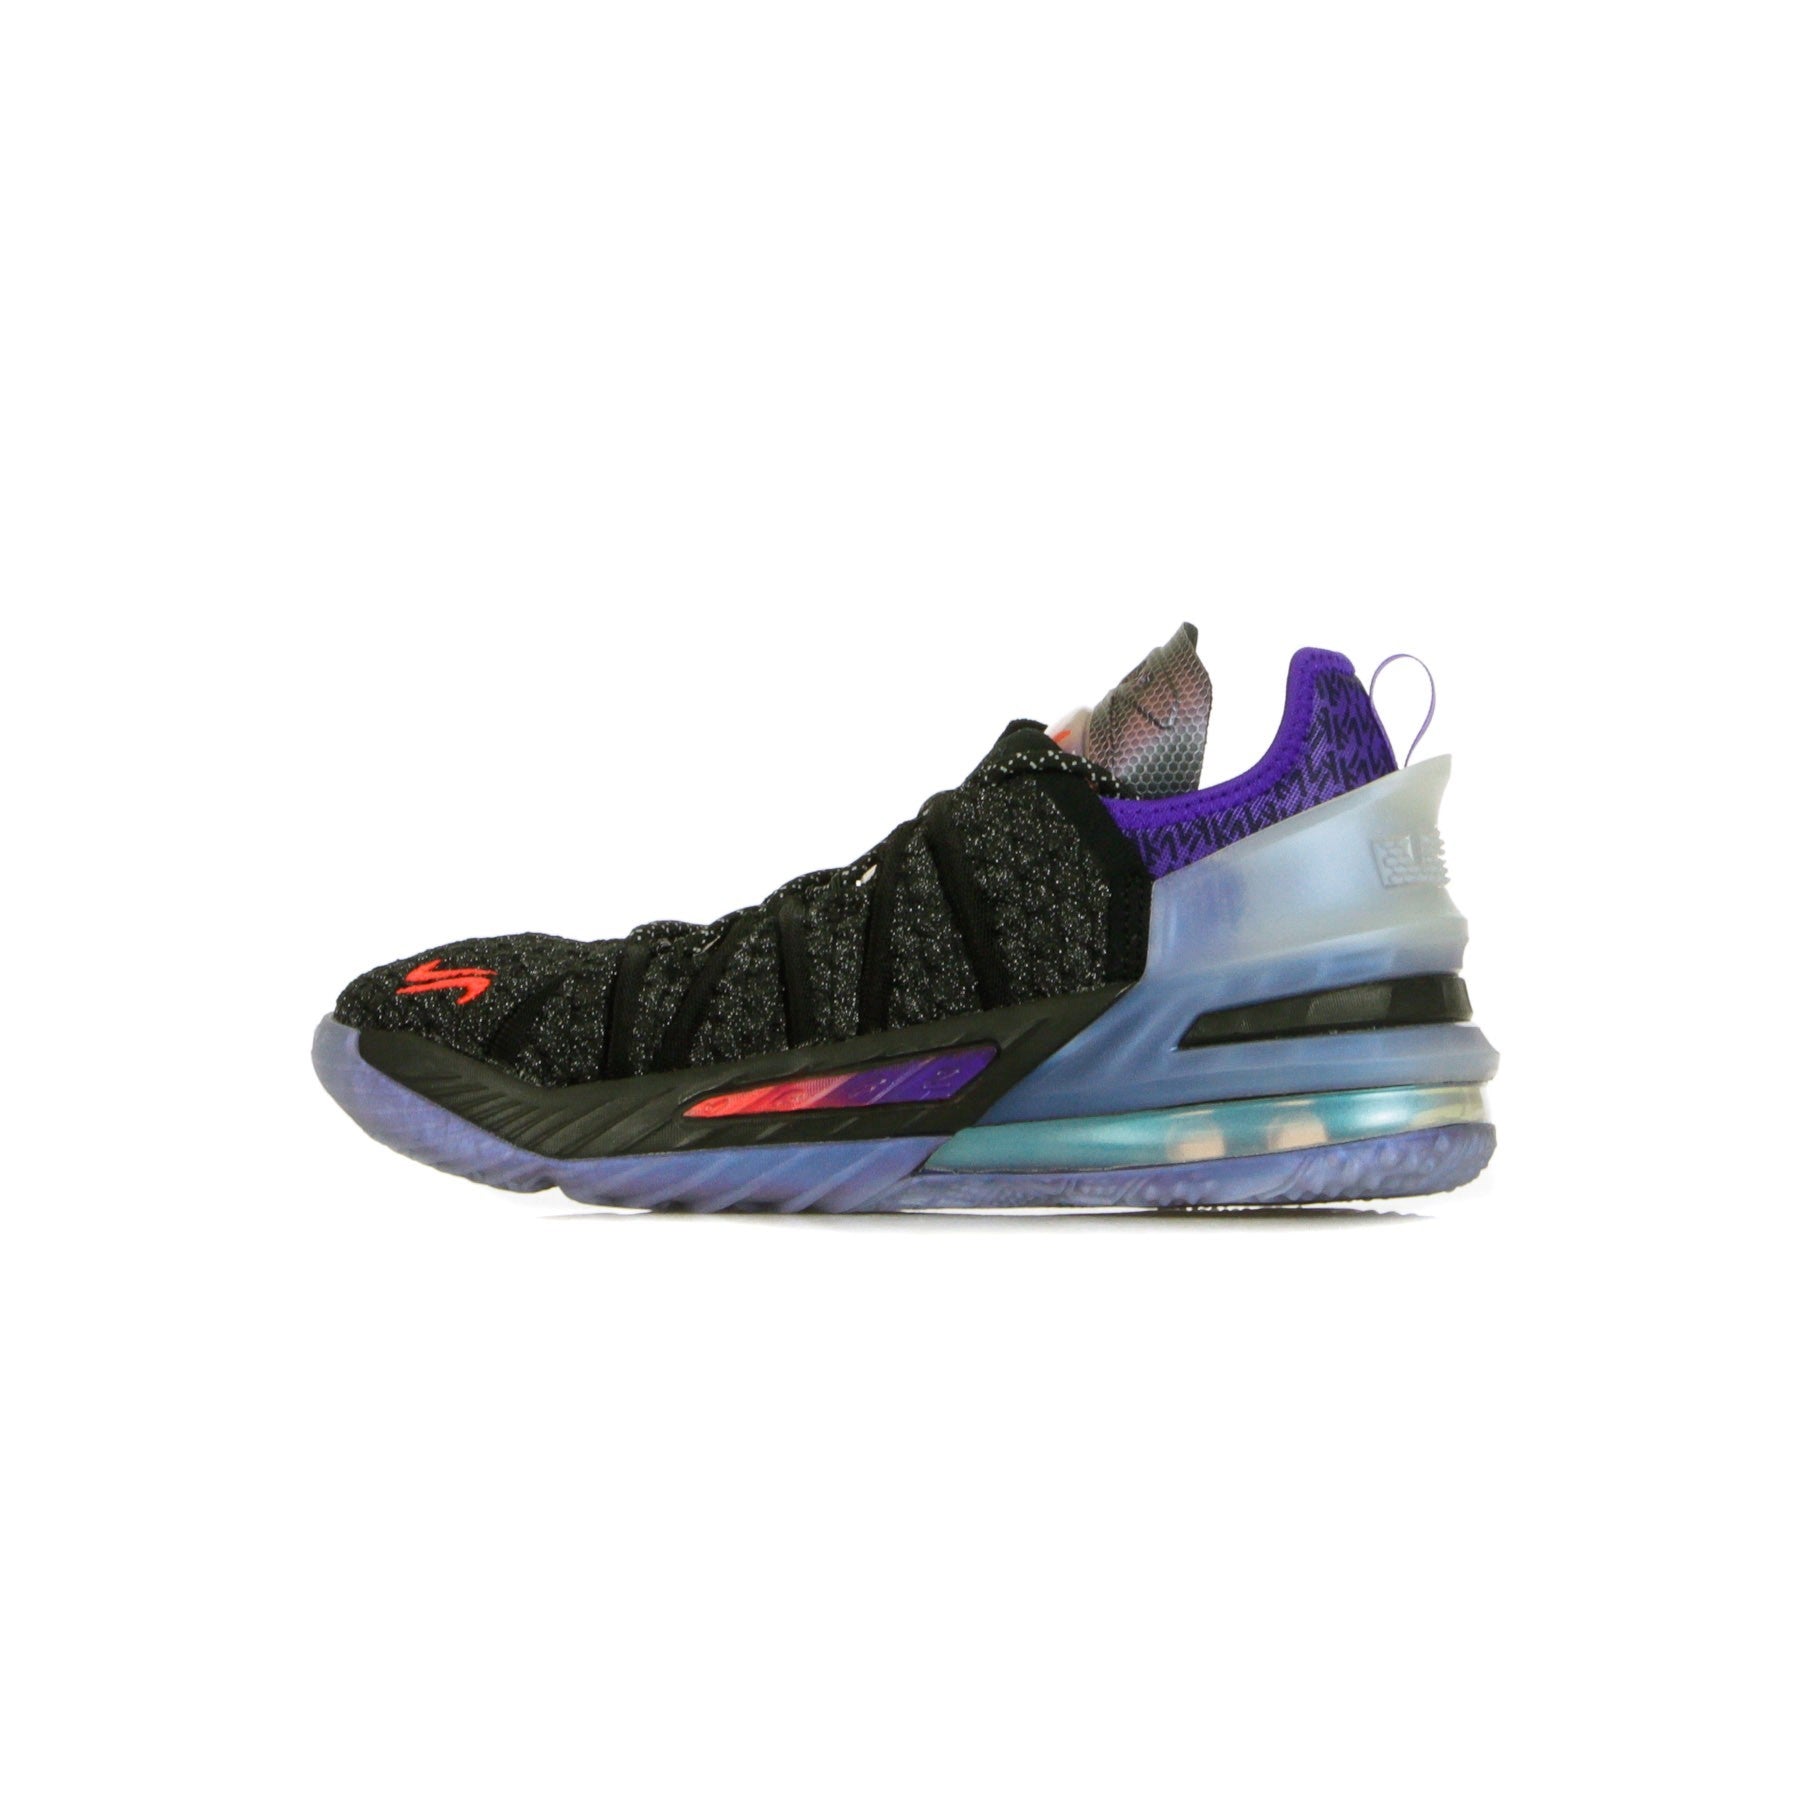 Basketball Shoe Boy Lebron Xviii Nrg (gs) Black/fierce Purple/metallic Silver/multicolor